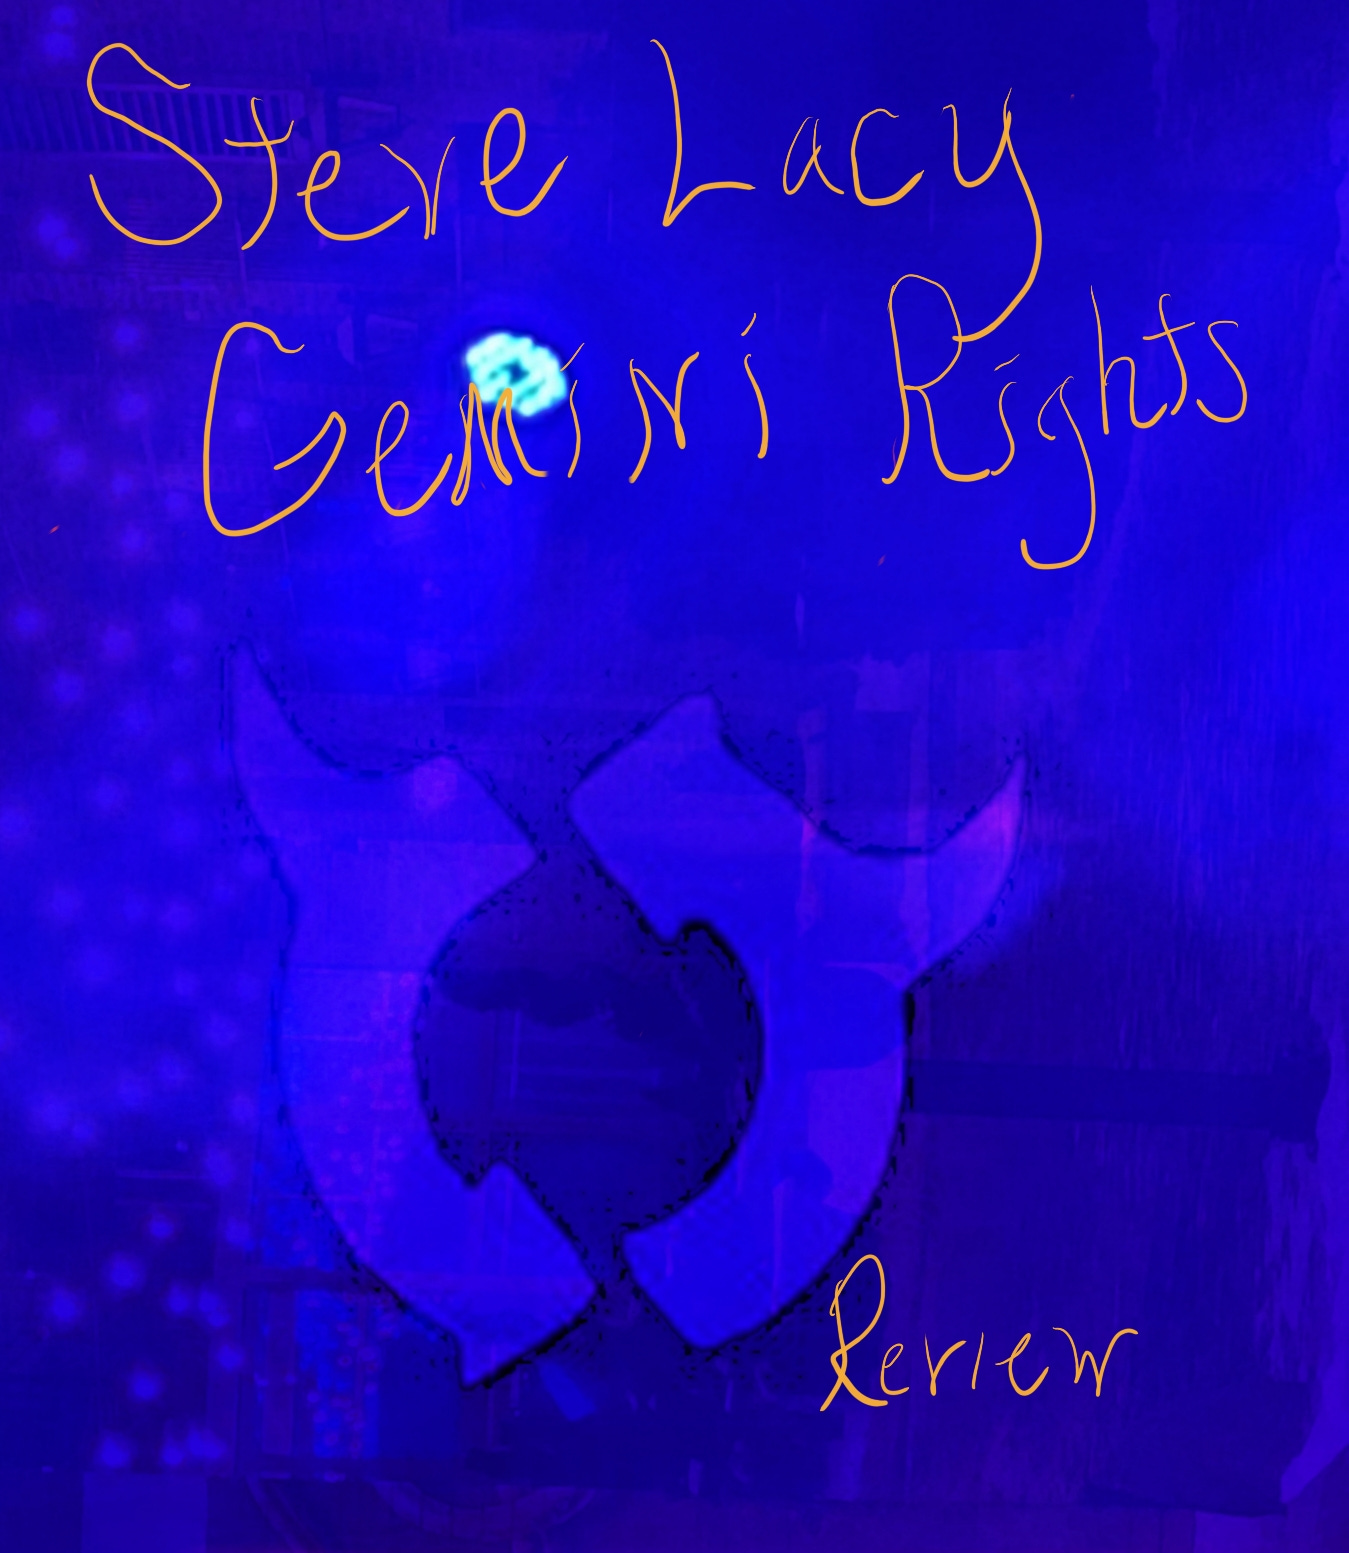 Steve Lacy - Gemini Rights ALBUM REVIEW 